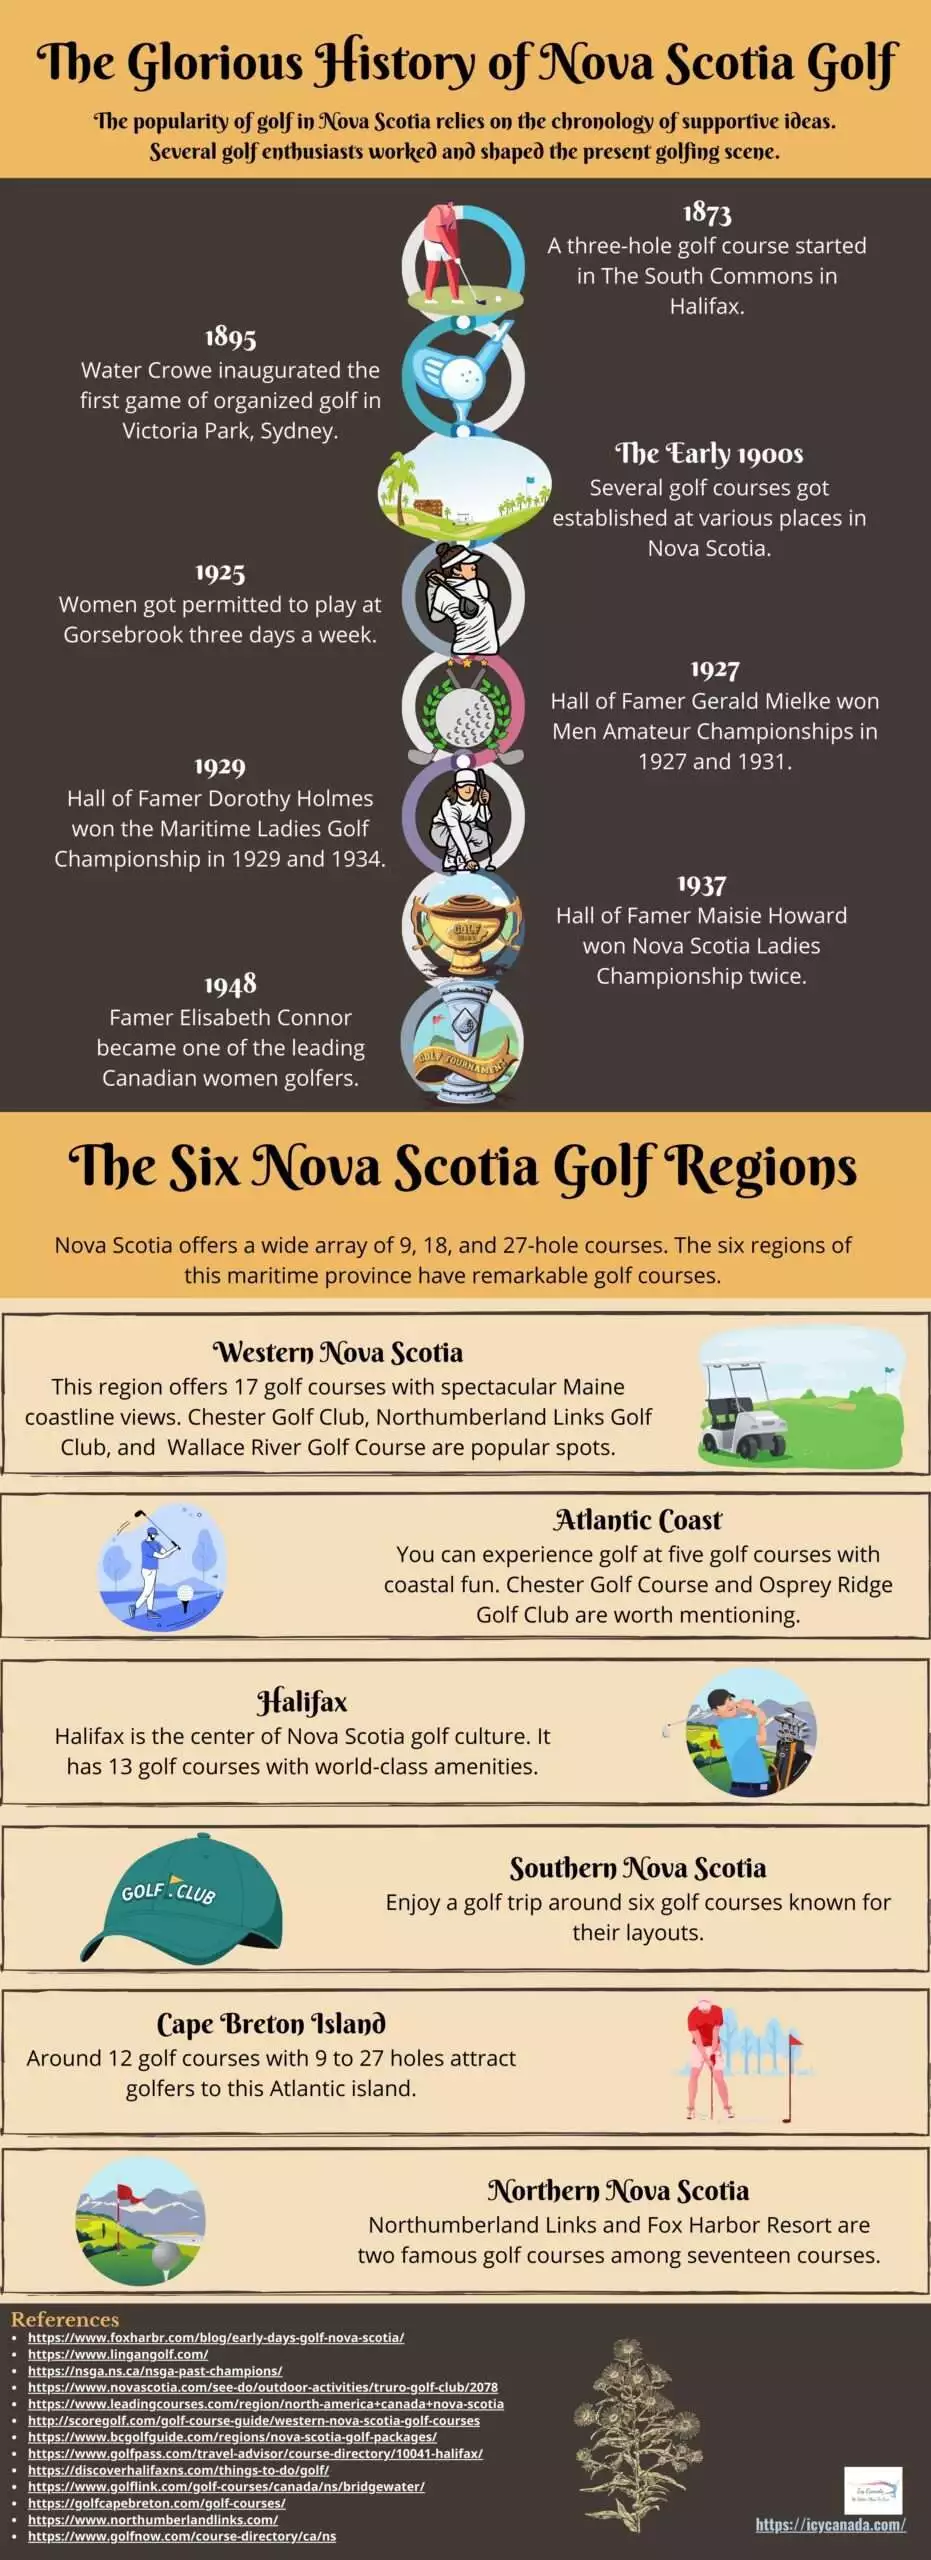 The Glorious History of Nova Scotia Golf